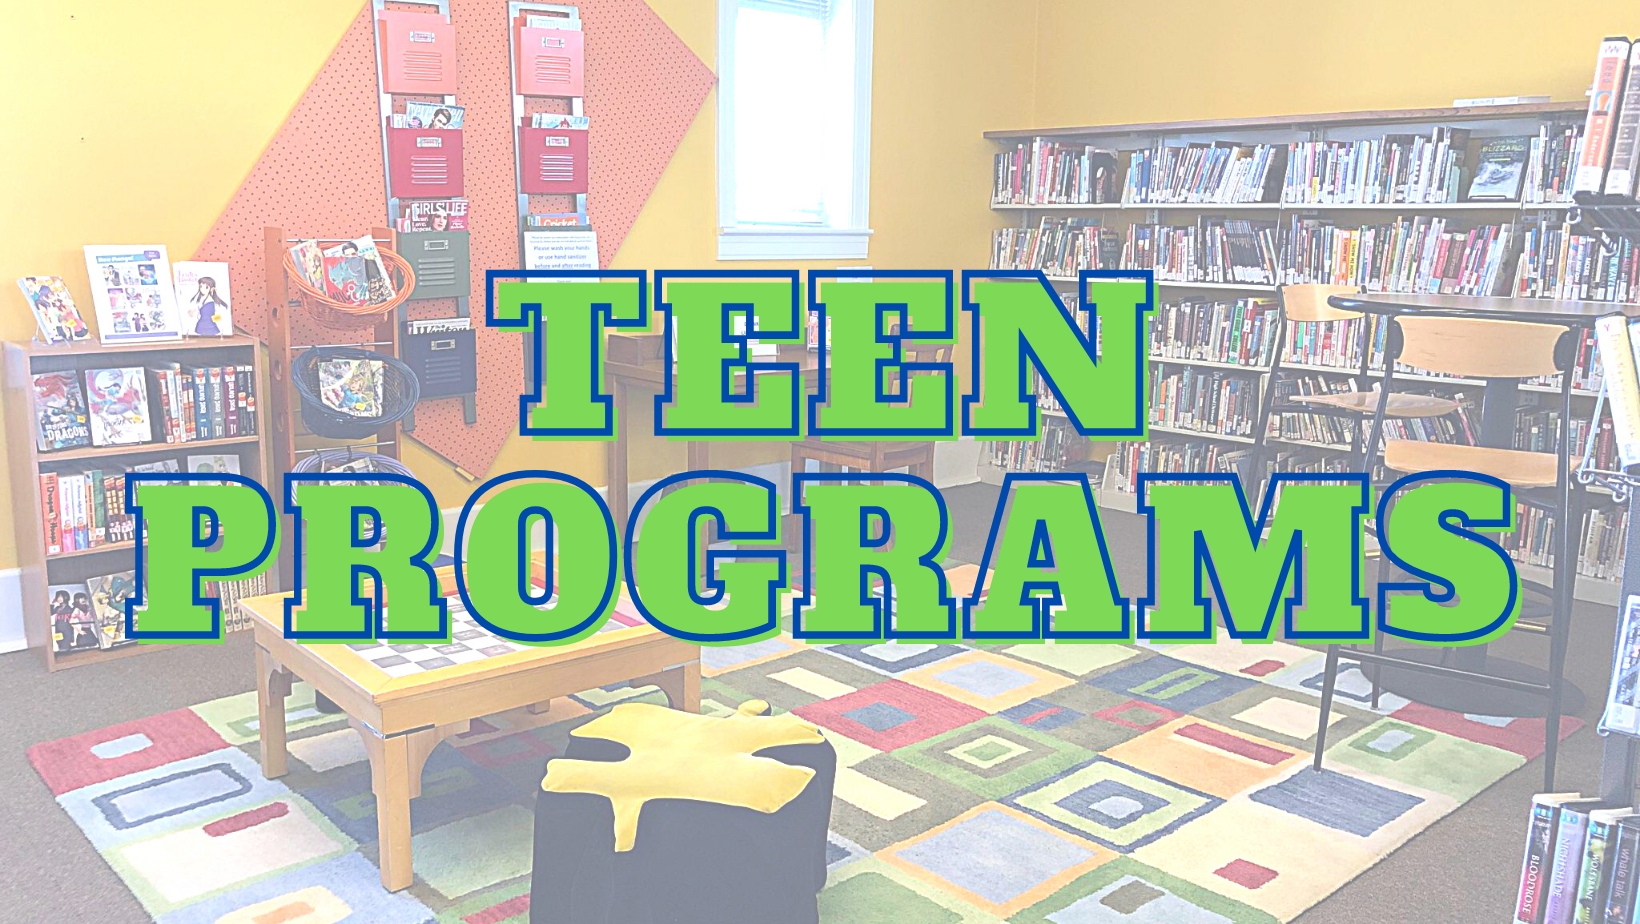 teen programs